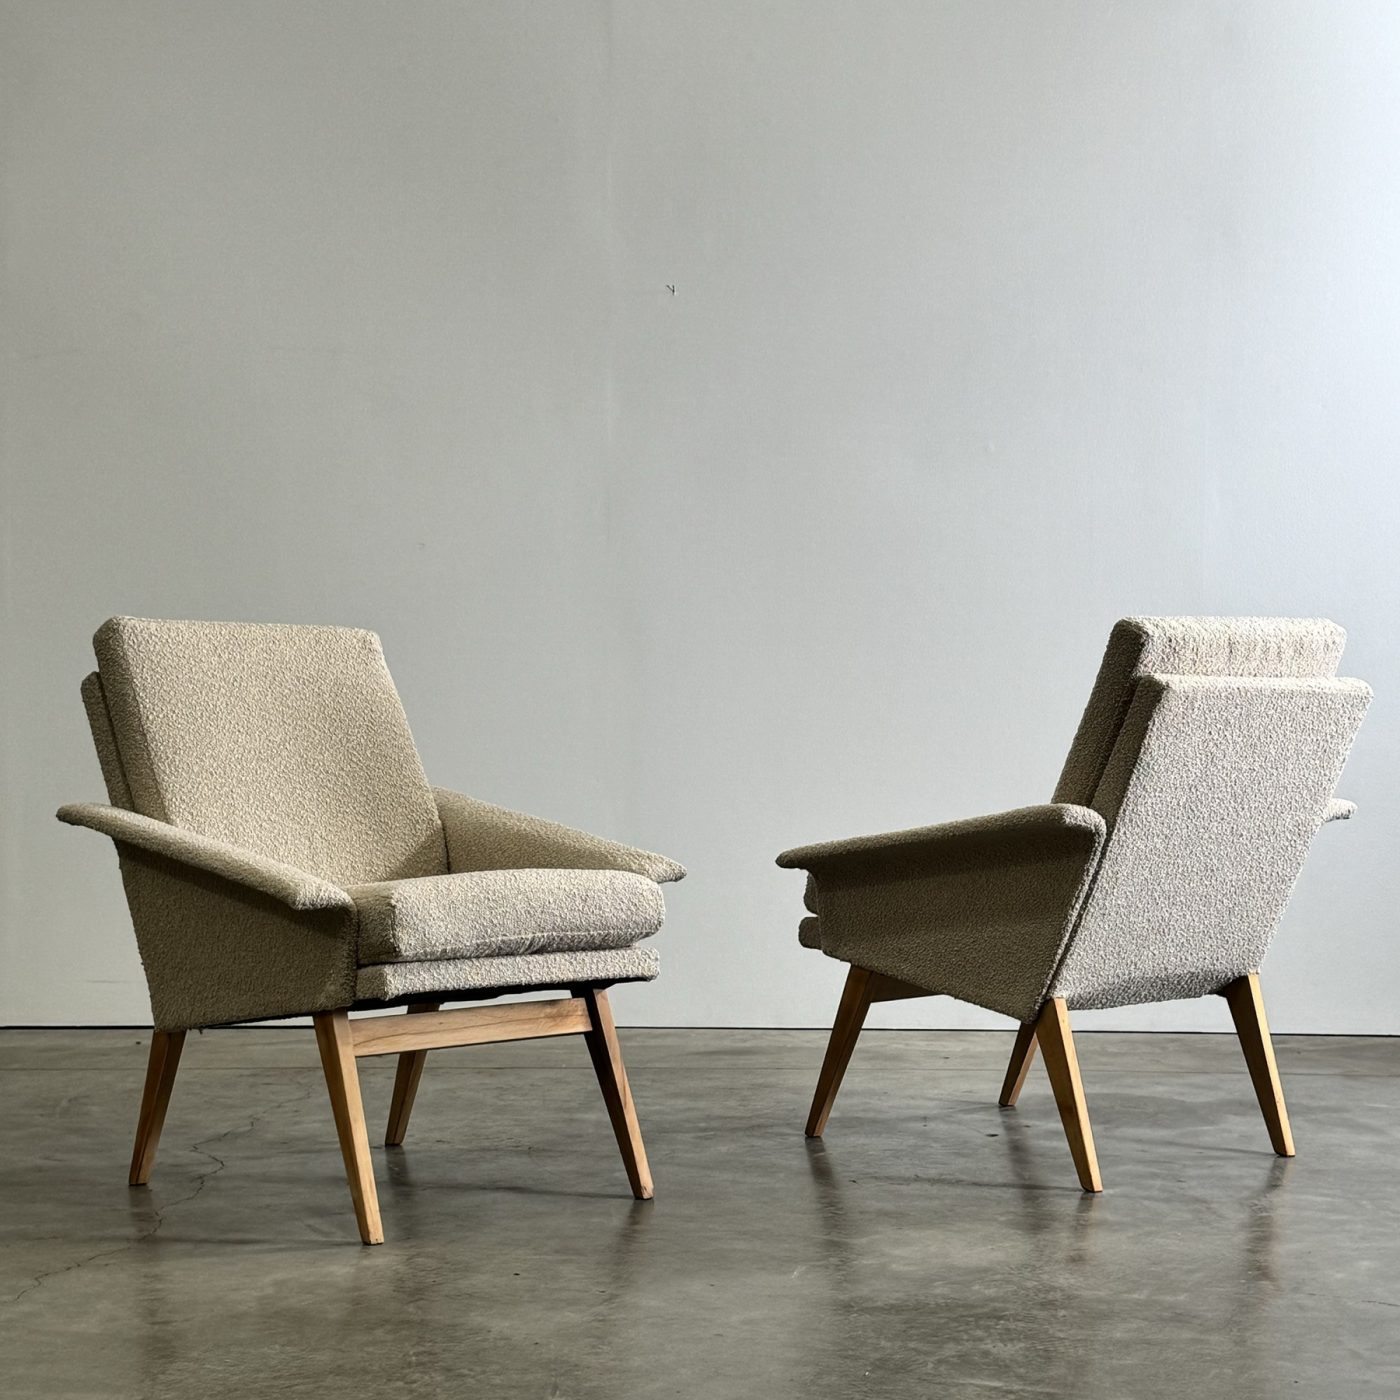 objet-vagabond-vintage-armchairs0004